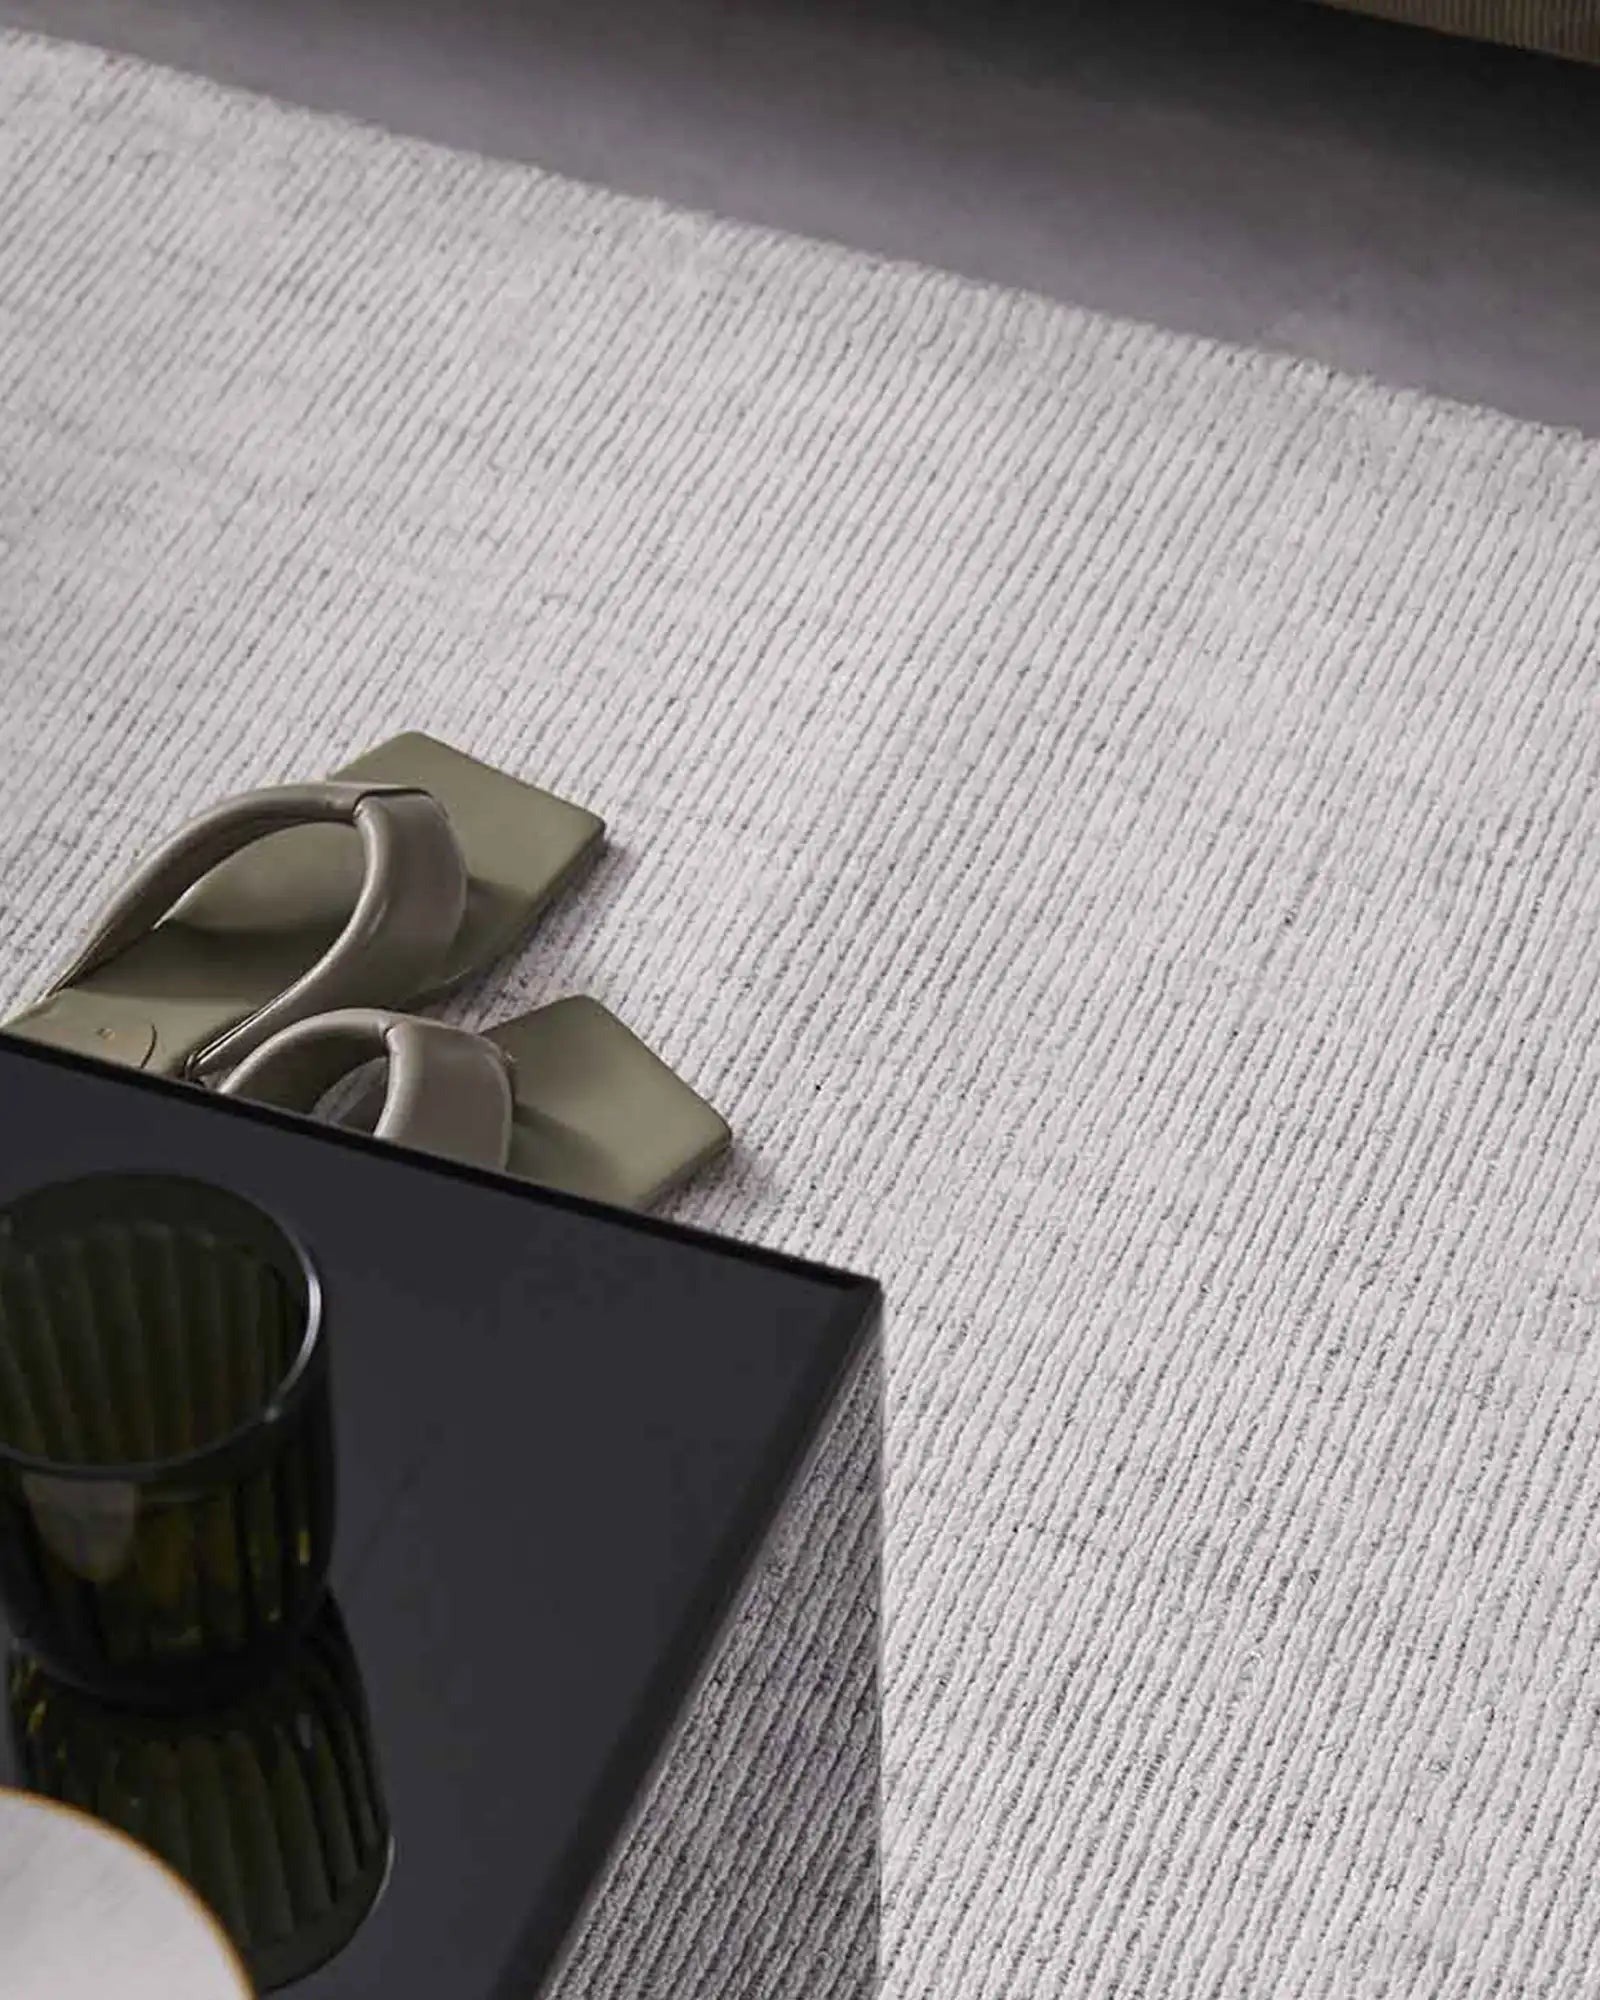 Travertine Floor Rug - Marble - 2m x 3m